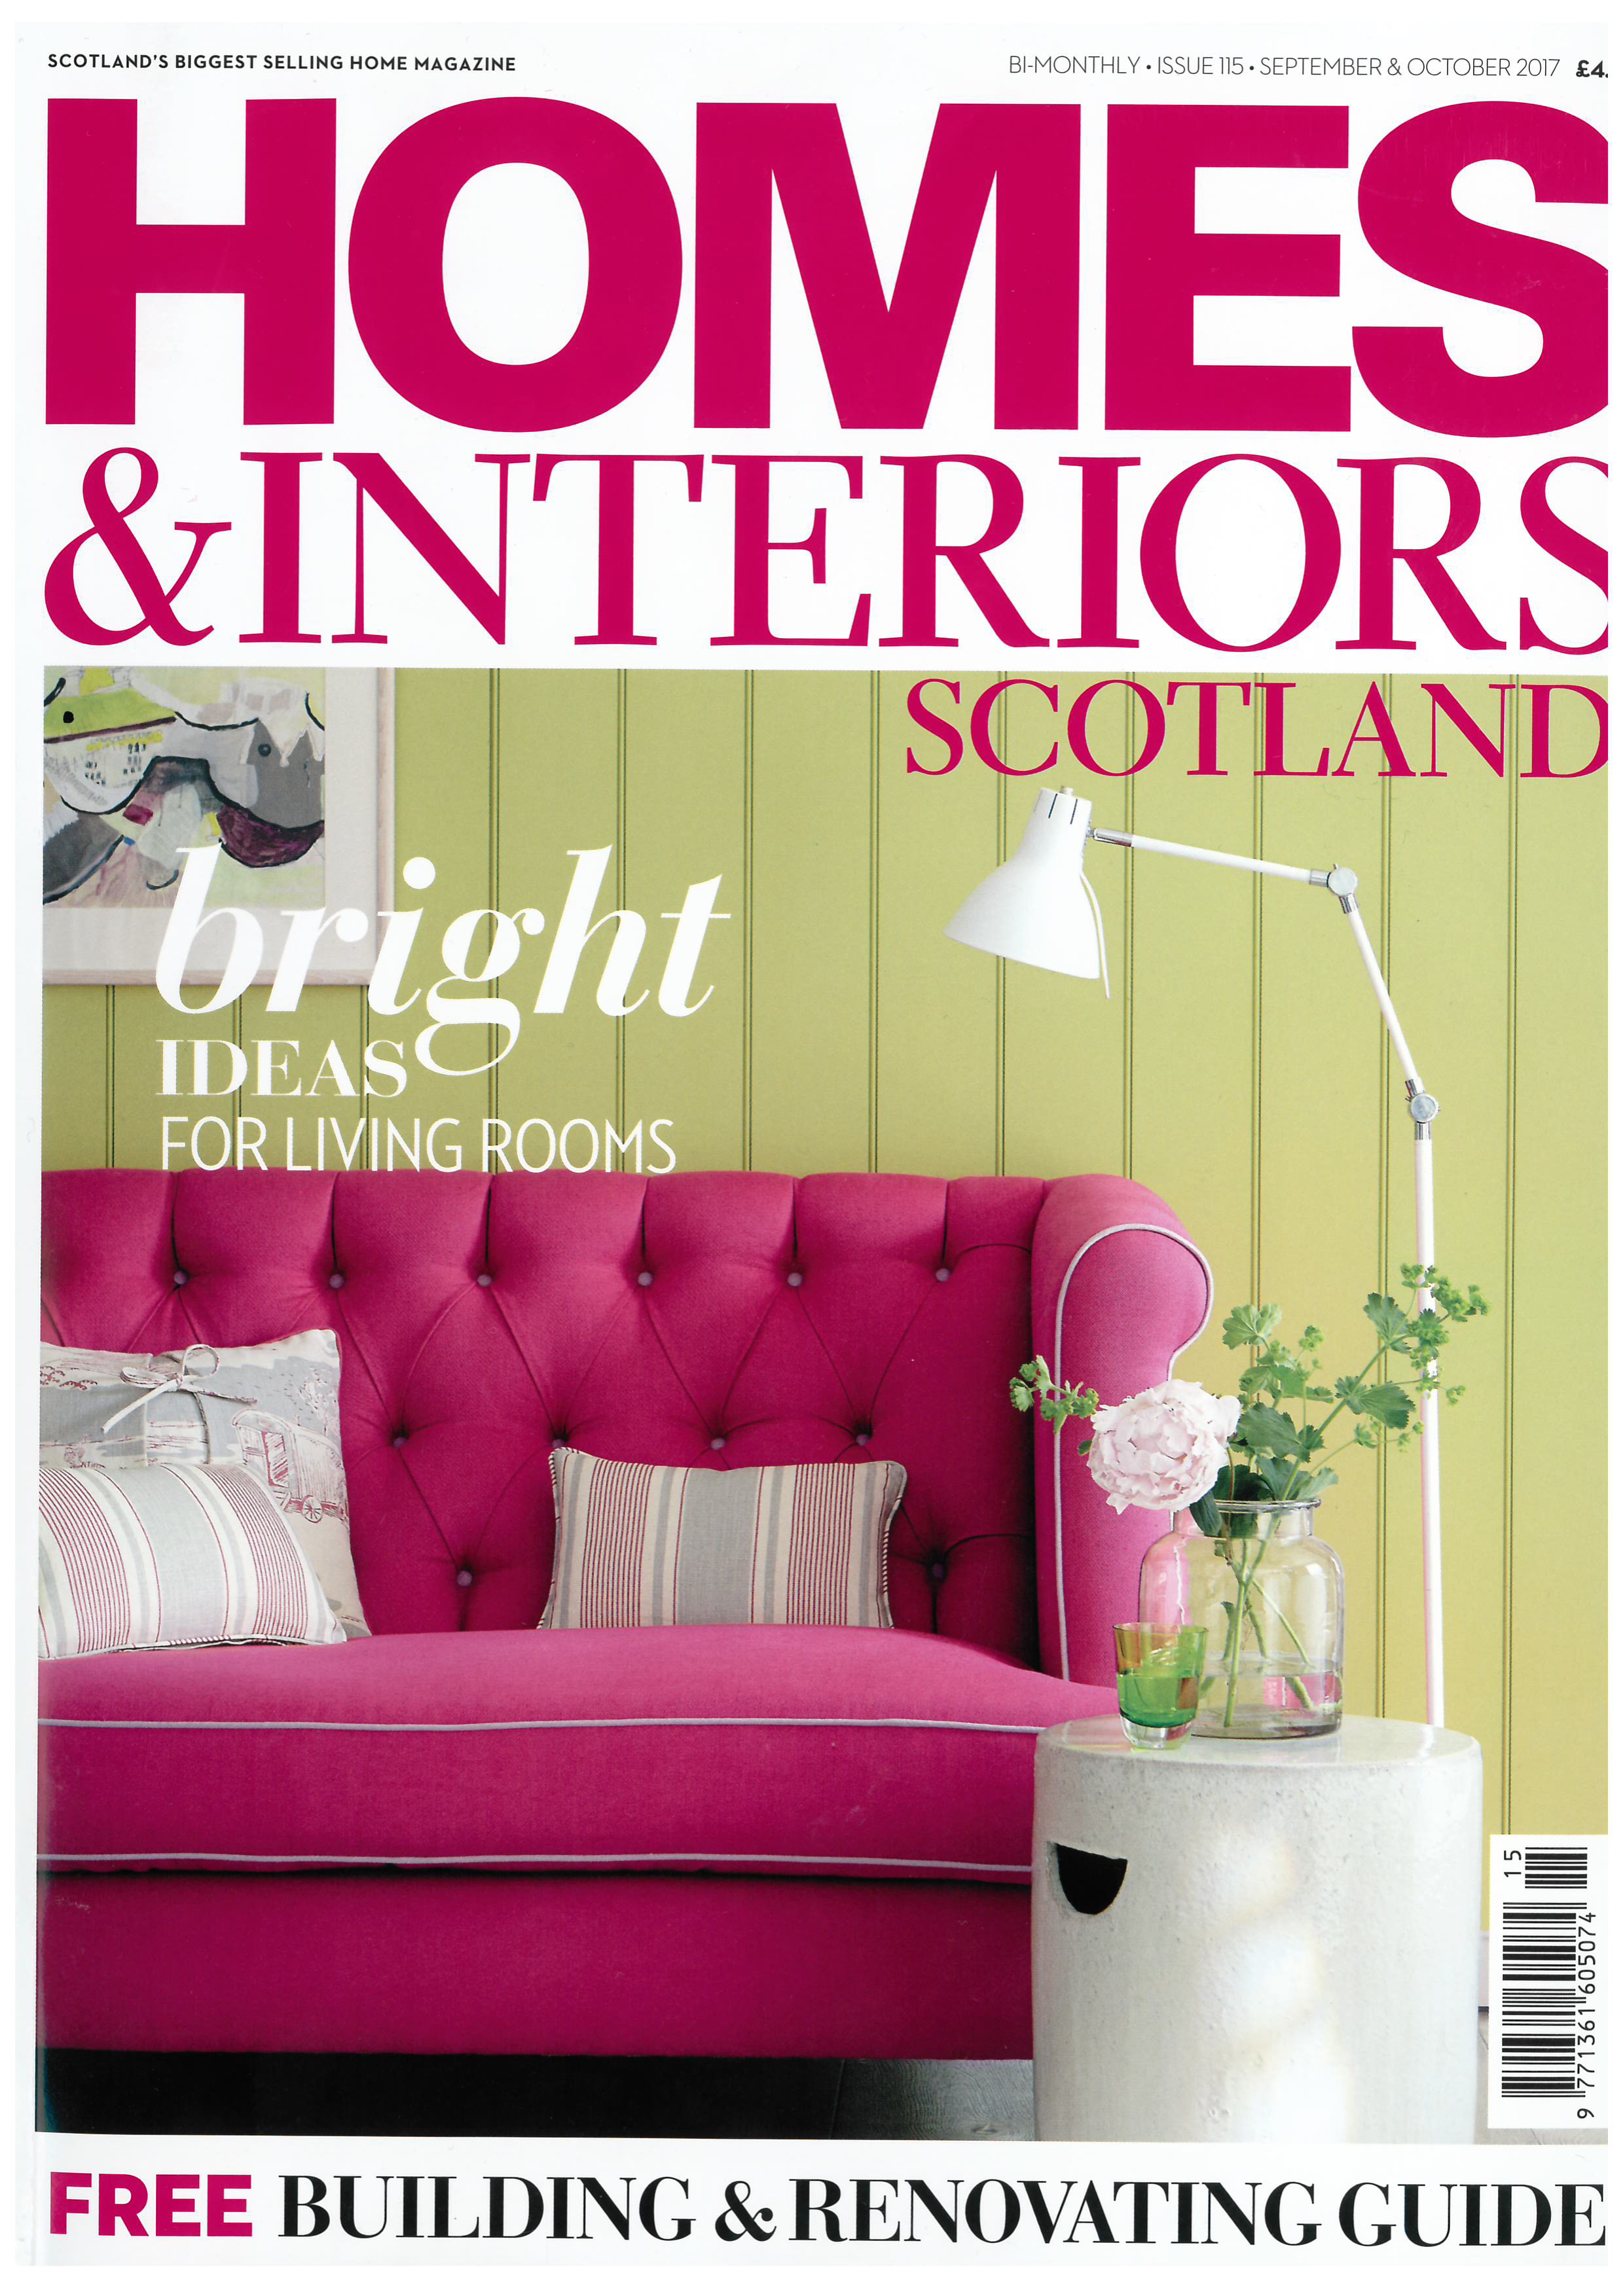 Home & Interiors: Craft & Design (Scotland) - Home & Interiors, Issue 115